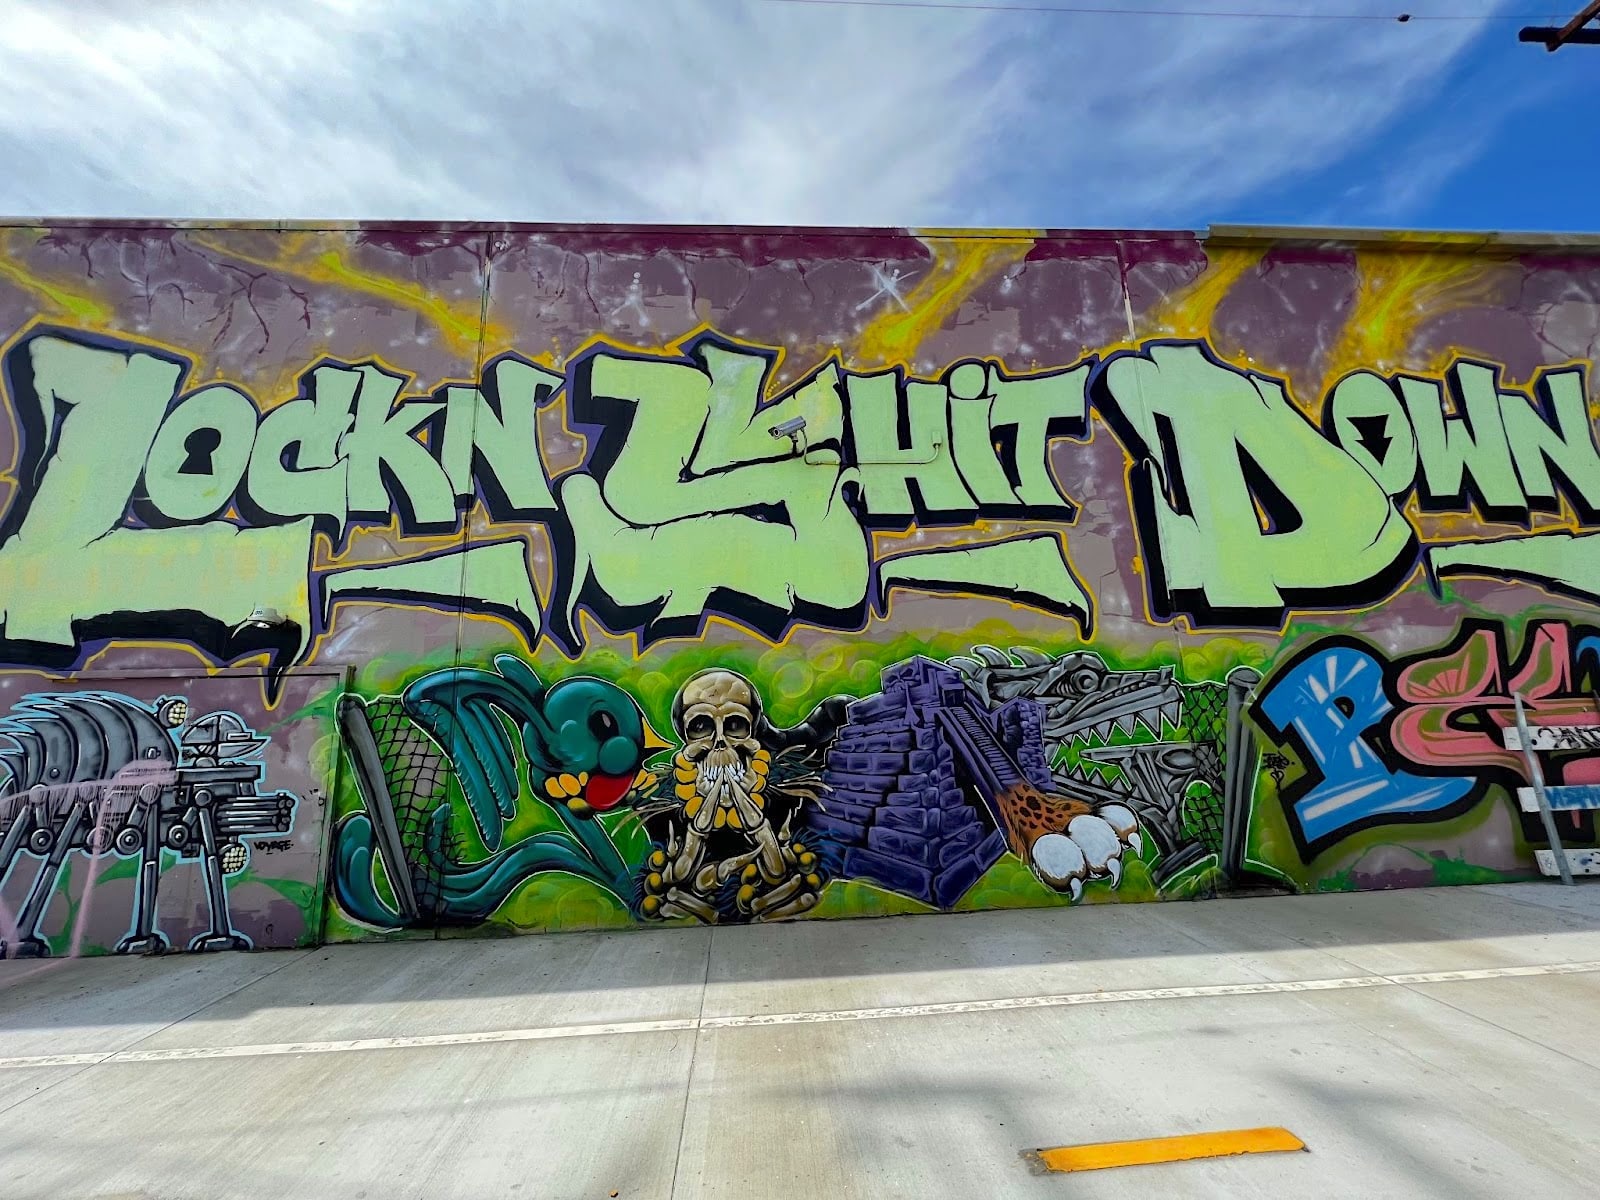 Graffiti that reads Lockin Shit Down